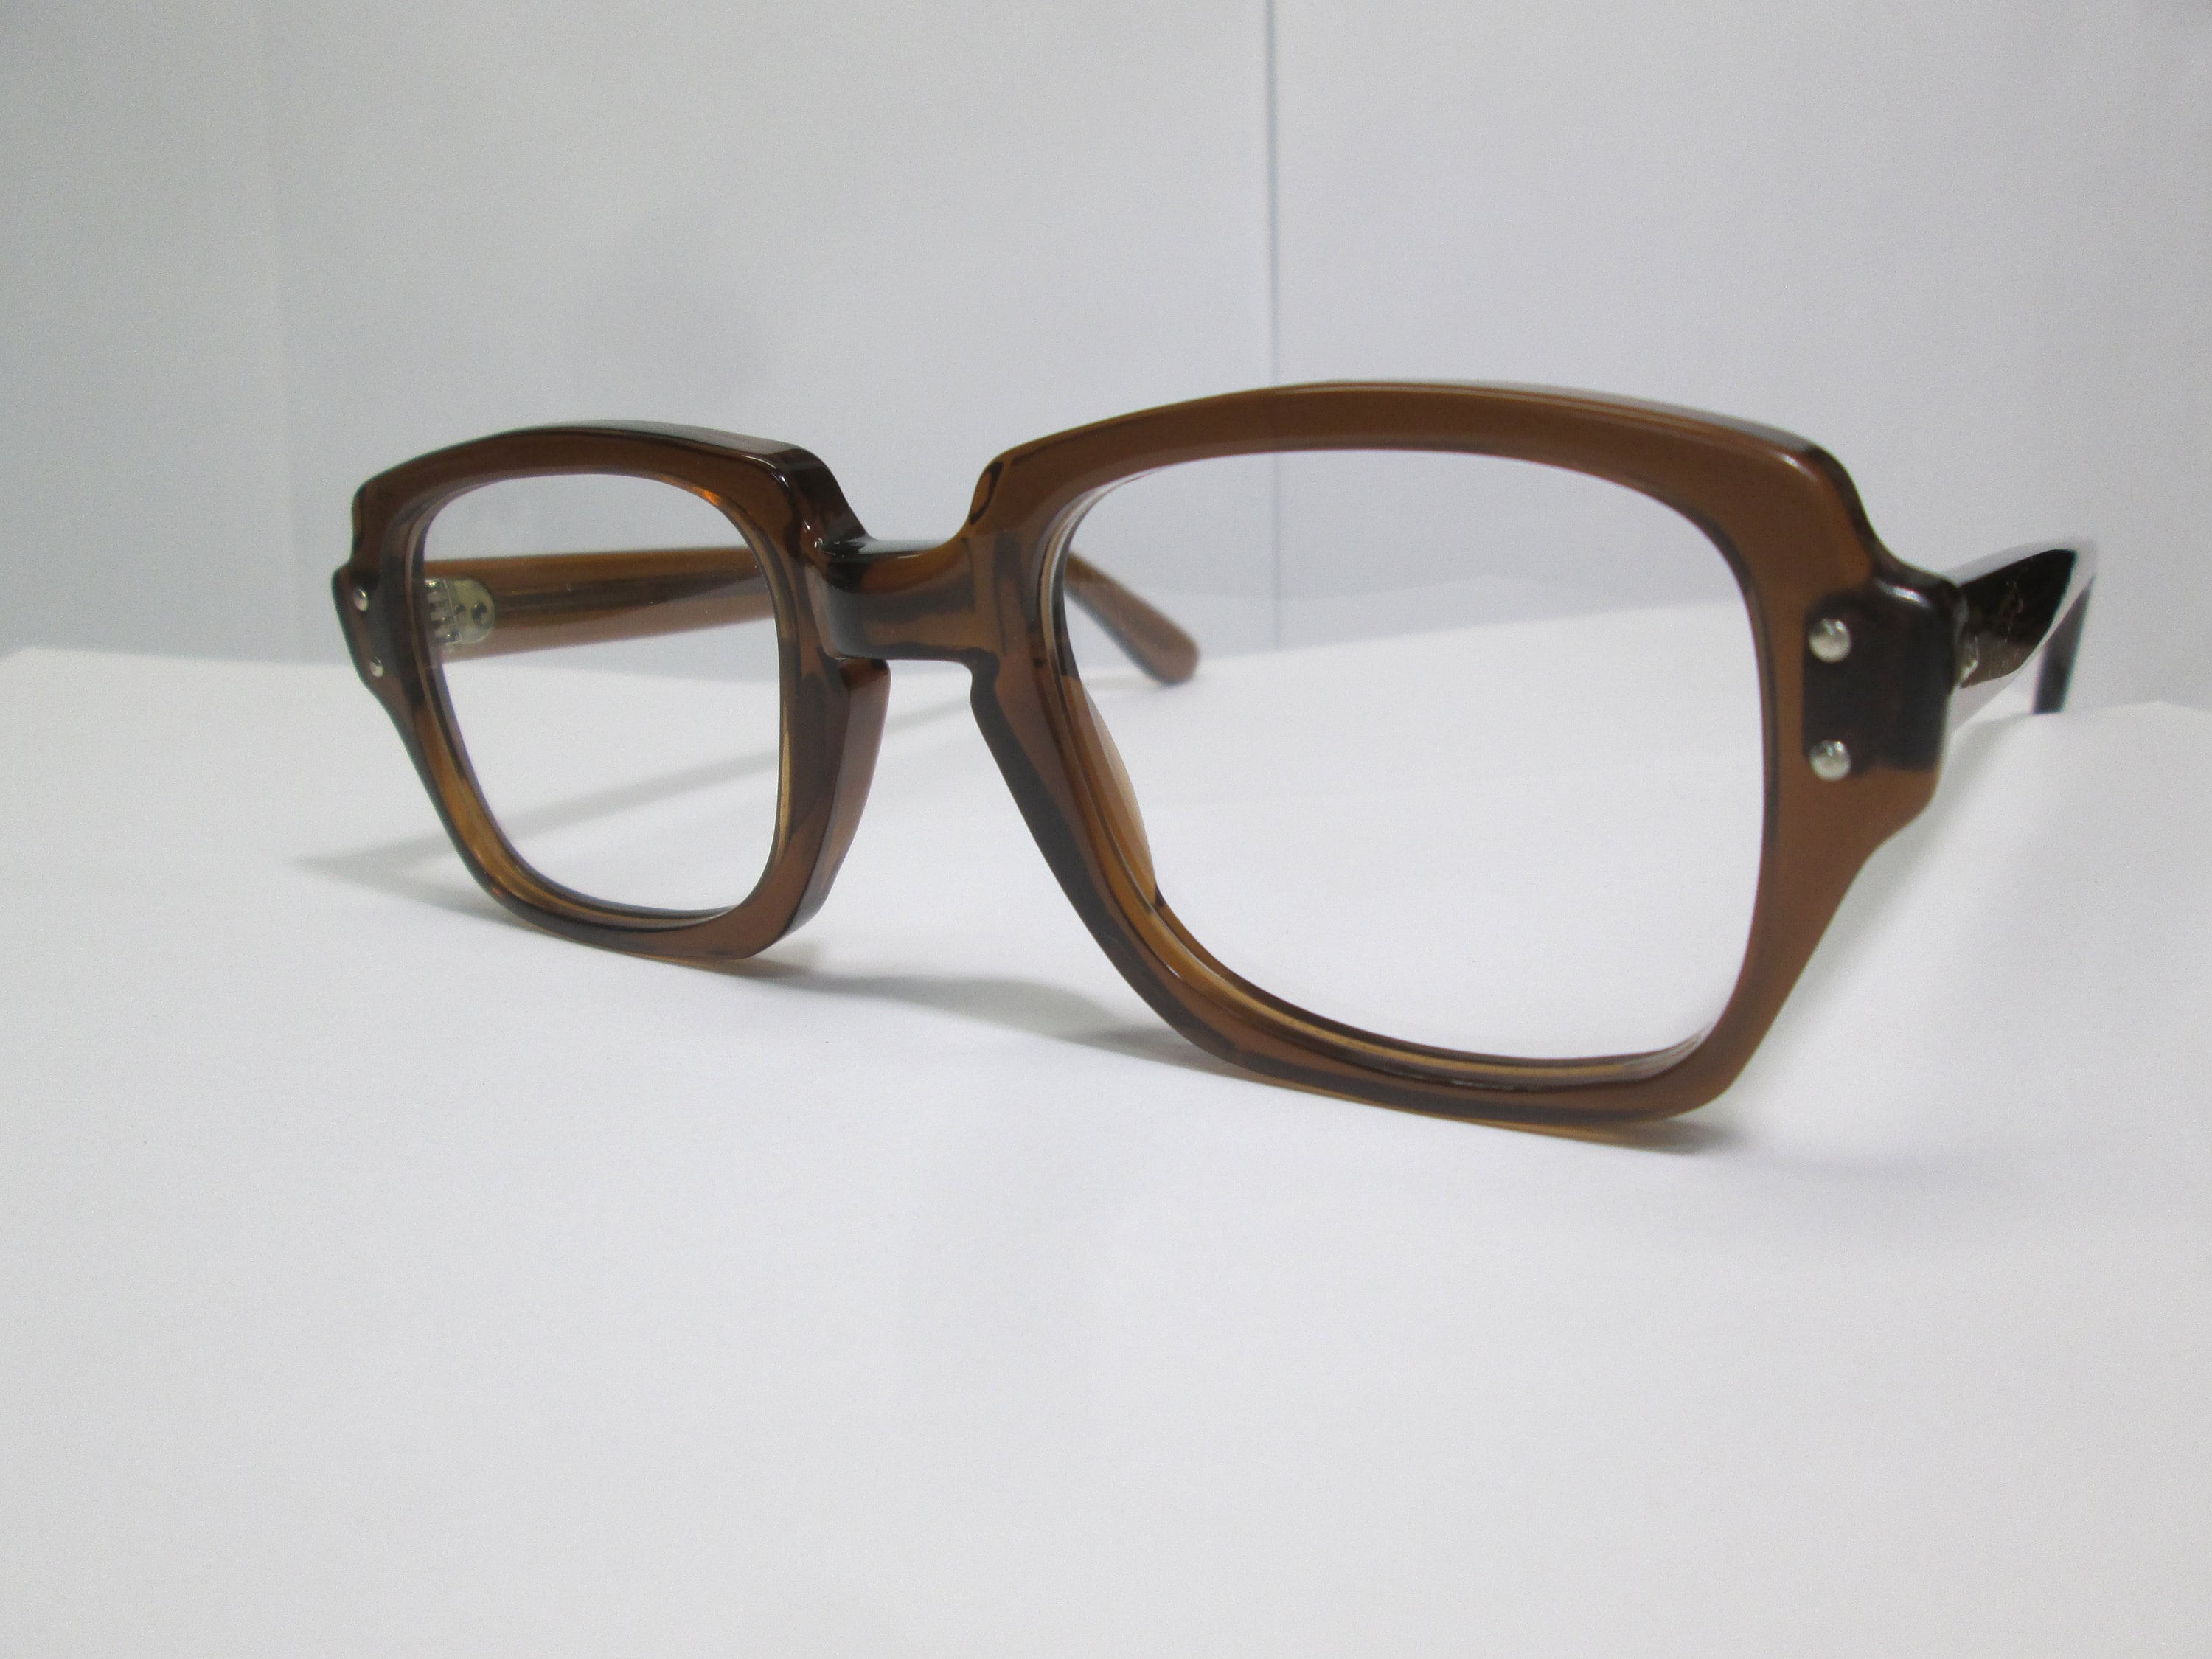 Unisex Accessories Birth Control Glasses Vintage Retro Bcg Military Surplus Eyeglass Frames 50